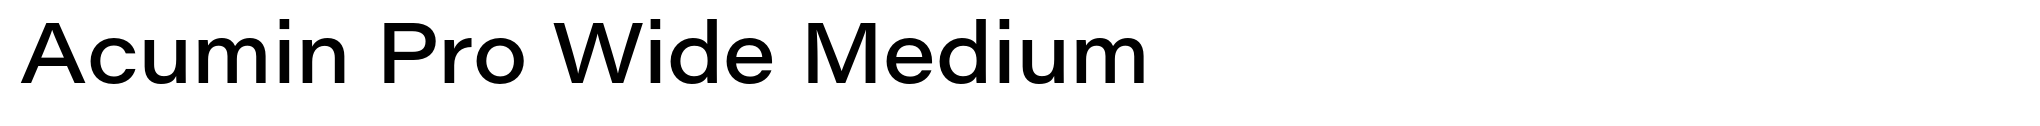 Acumin Pro Wide Medium image